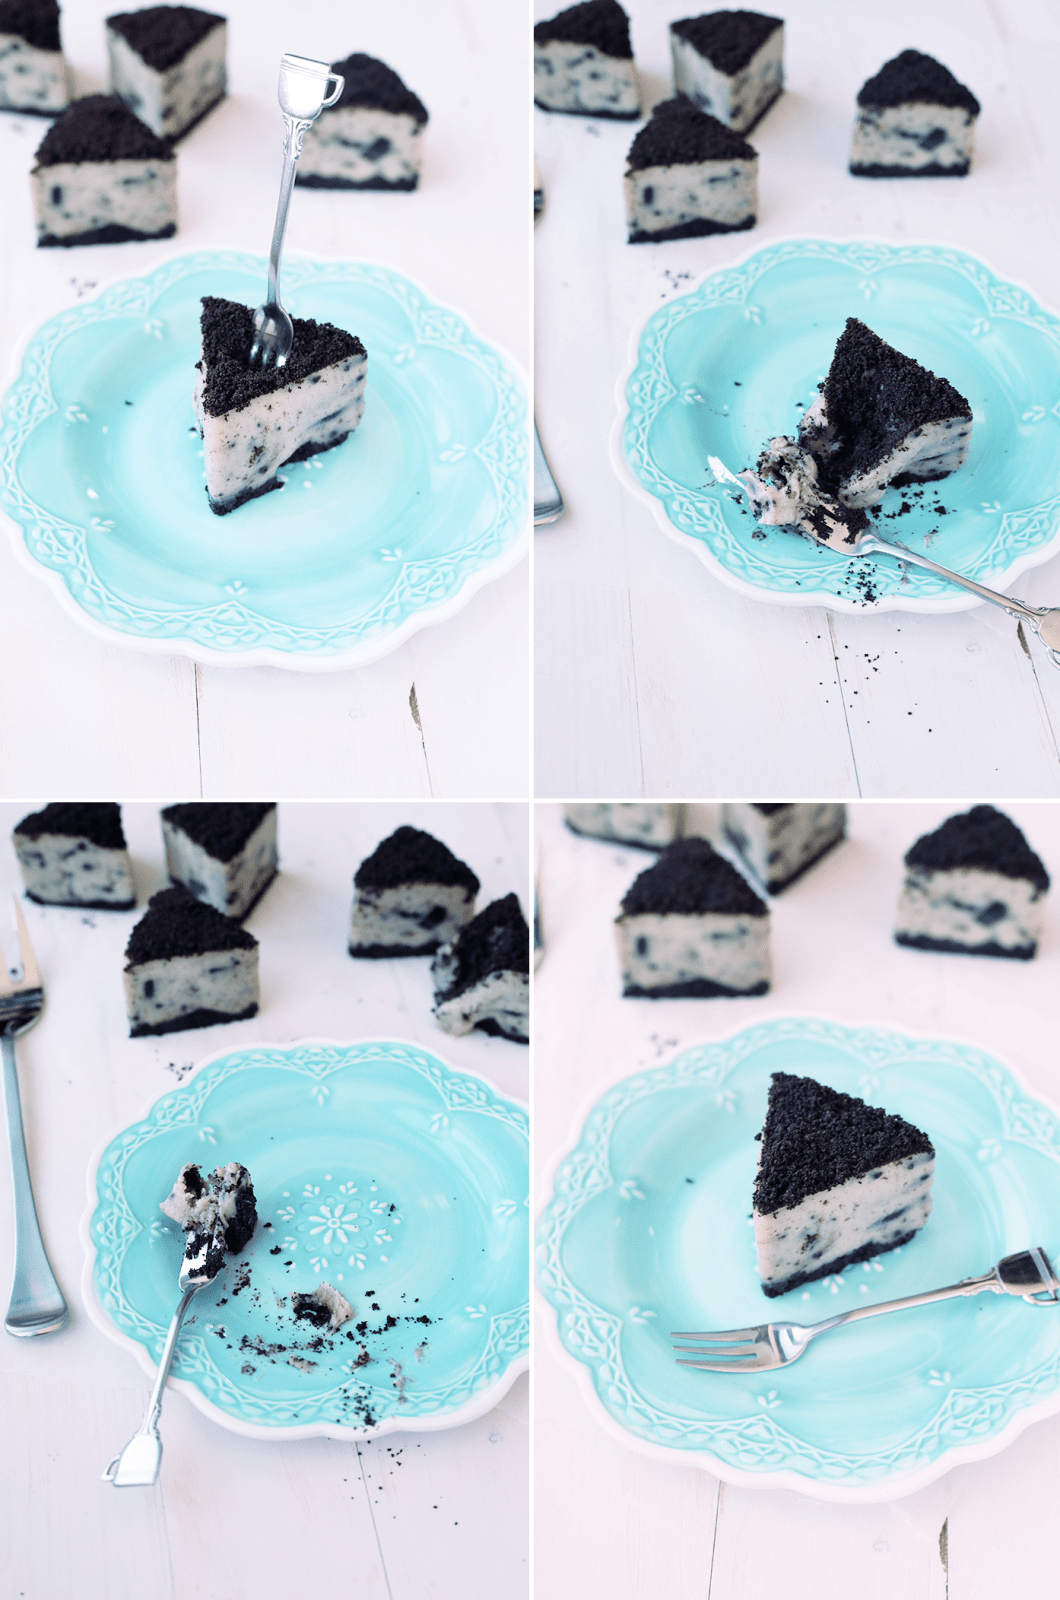 Vegan Oreo Cheesecake Recipe - No Bake #veganfood #veganrecipes #oreos #cheesecake #cashewcheesecake